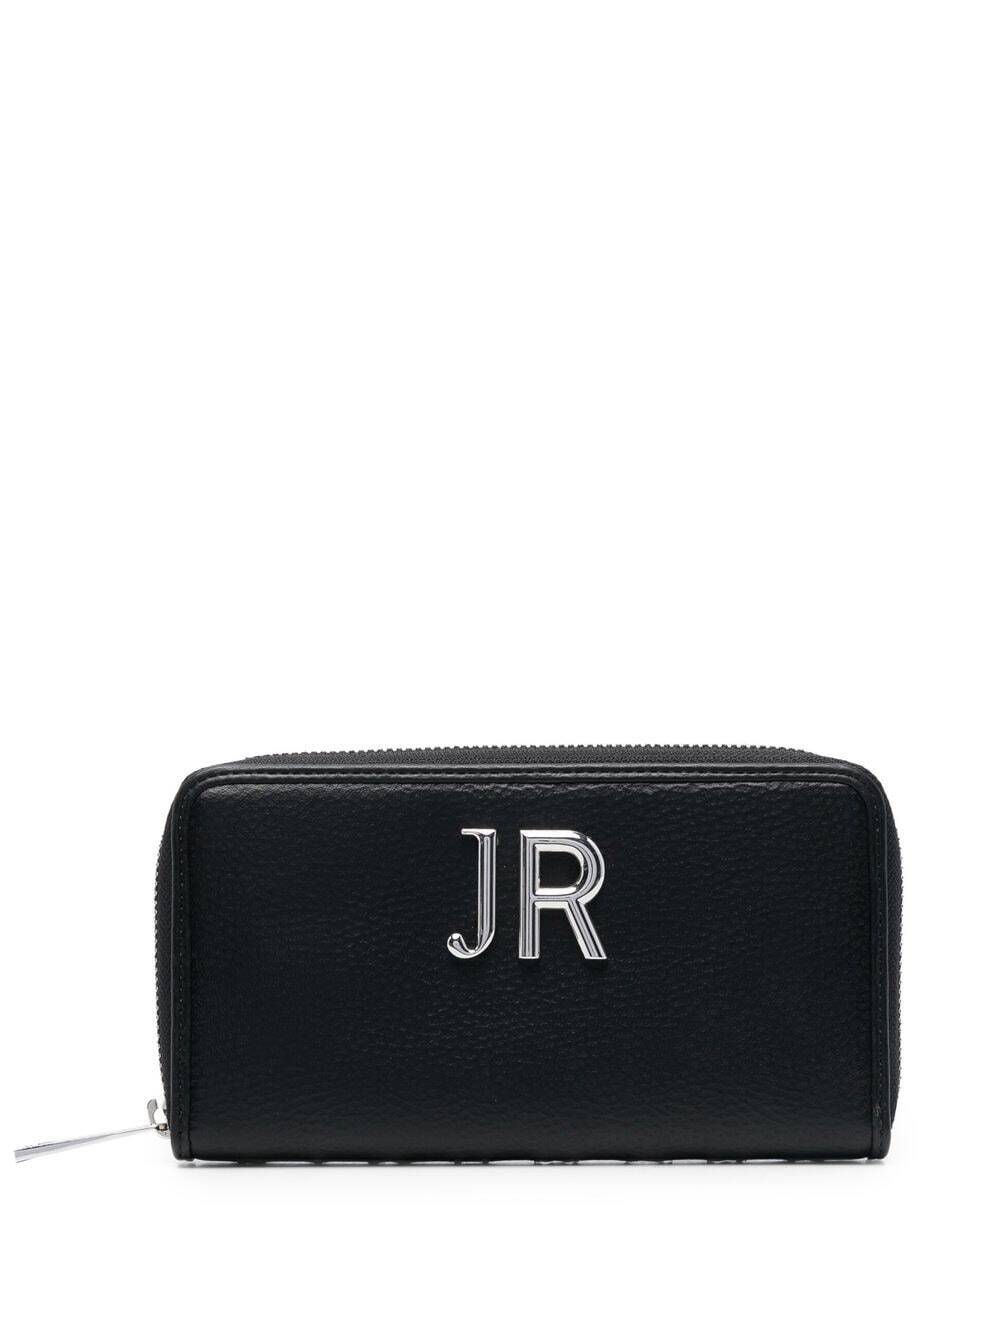 John Richmond logo-plaque leather wallet - Black